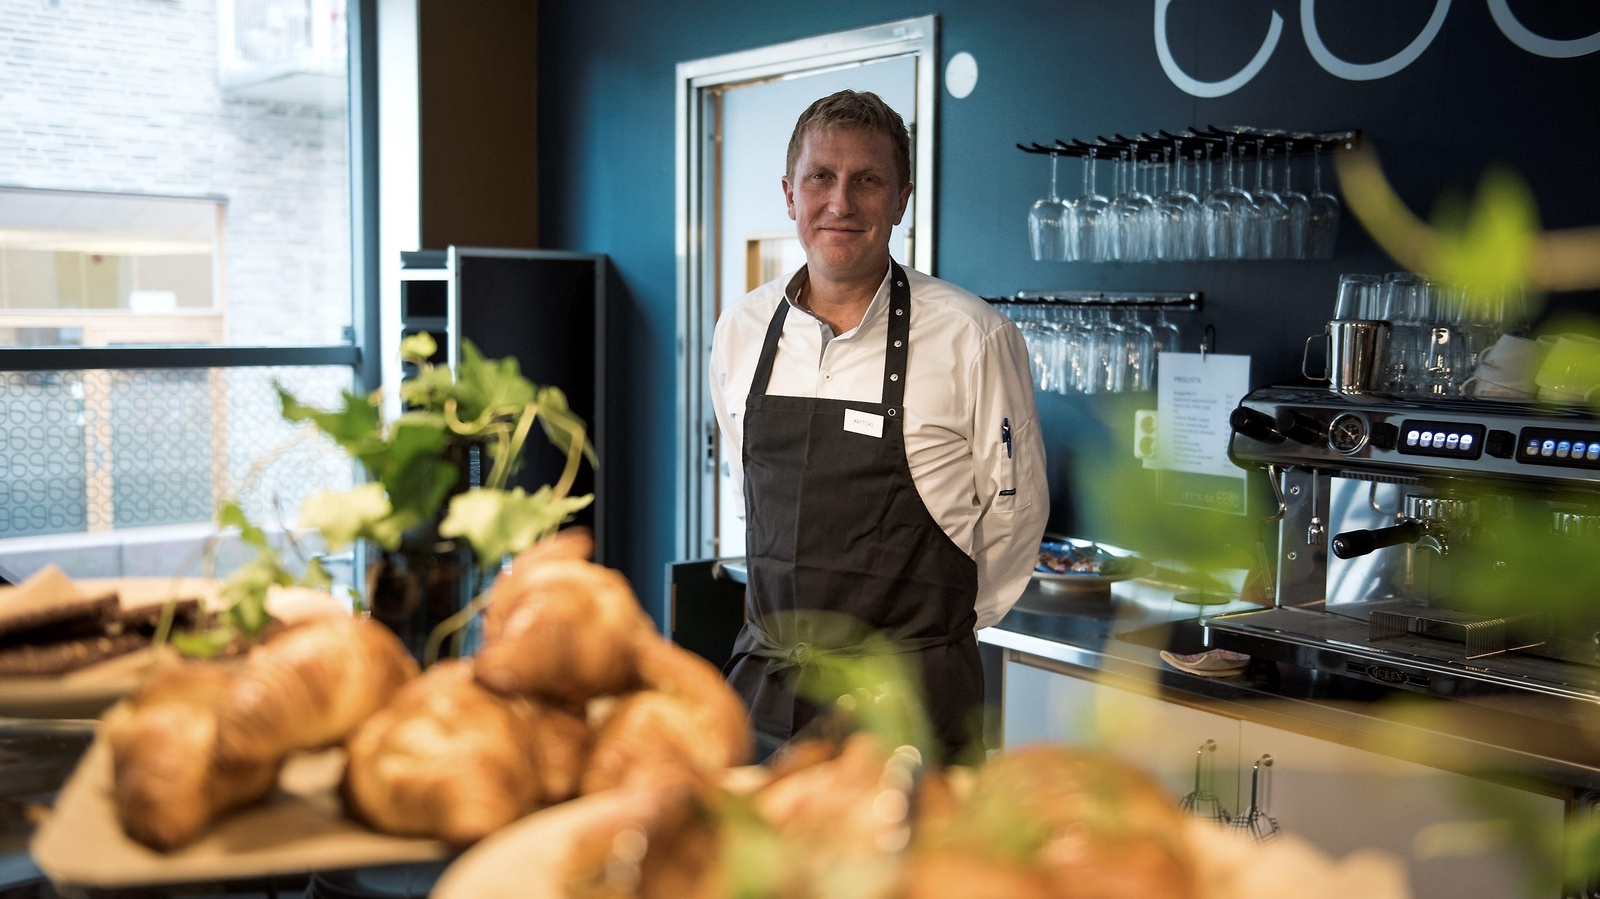 Matias Wiklund driver Eat i kulturhuset.